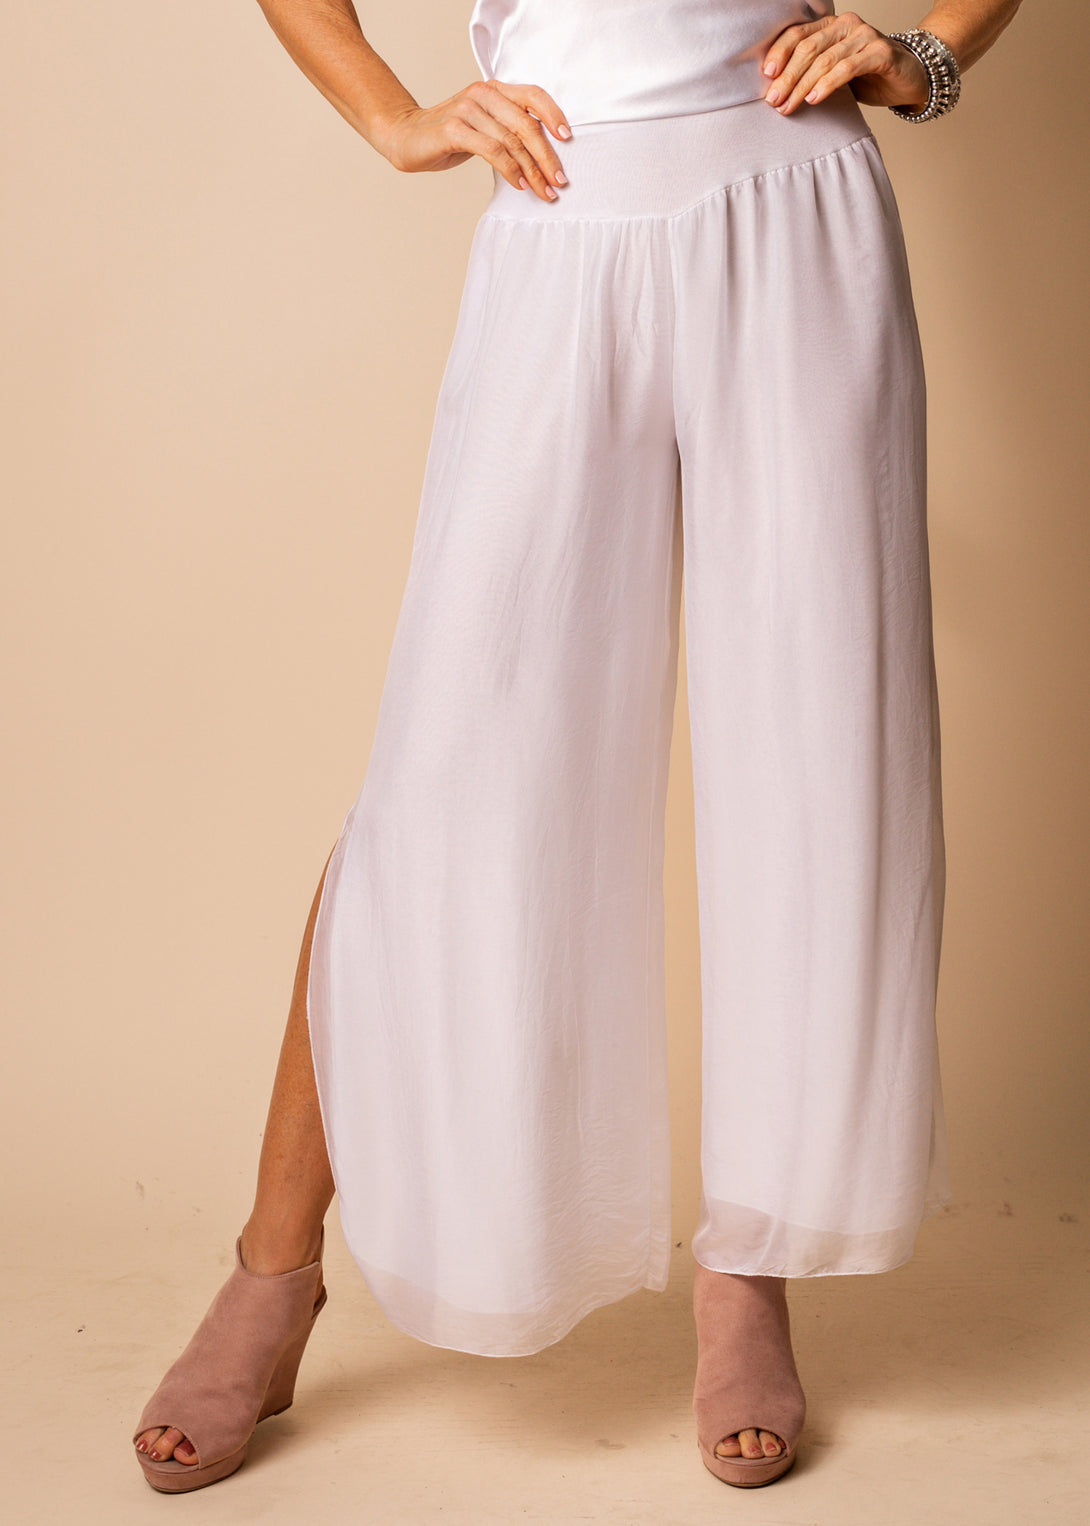 Gia Silk Pants in White - Imagine Fashion